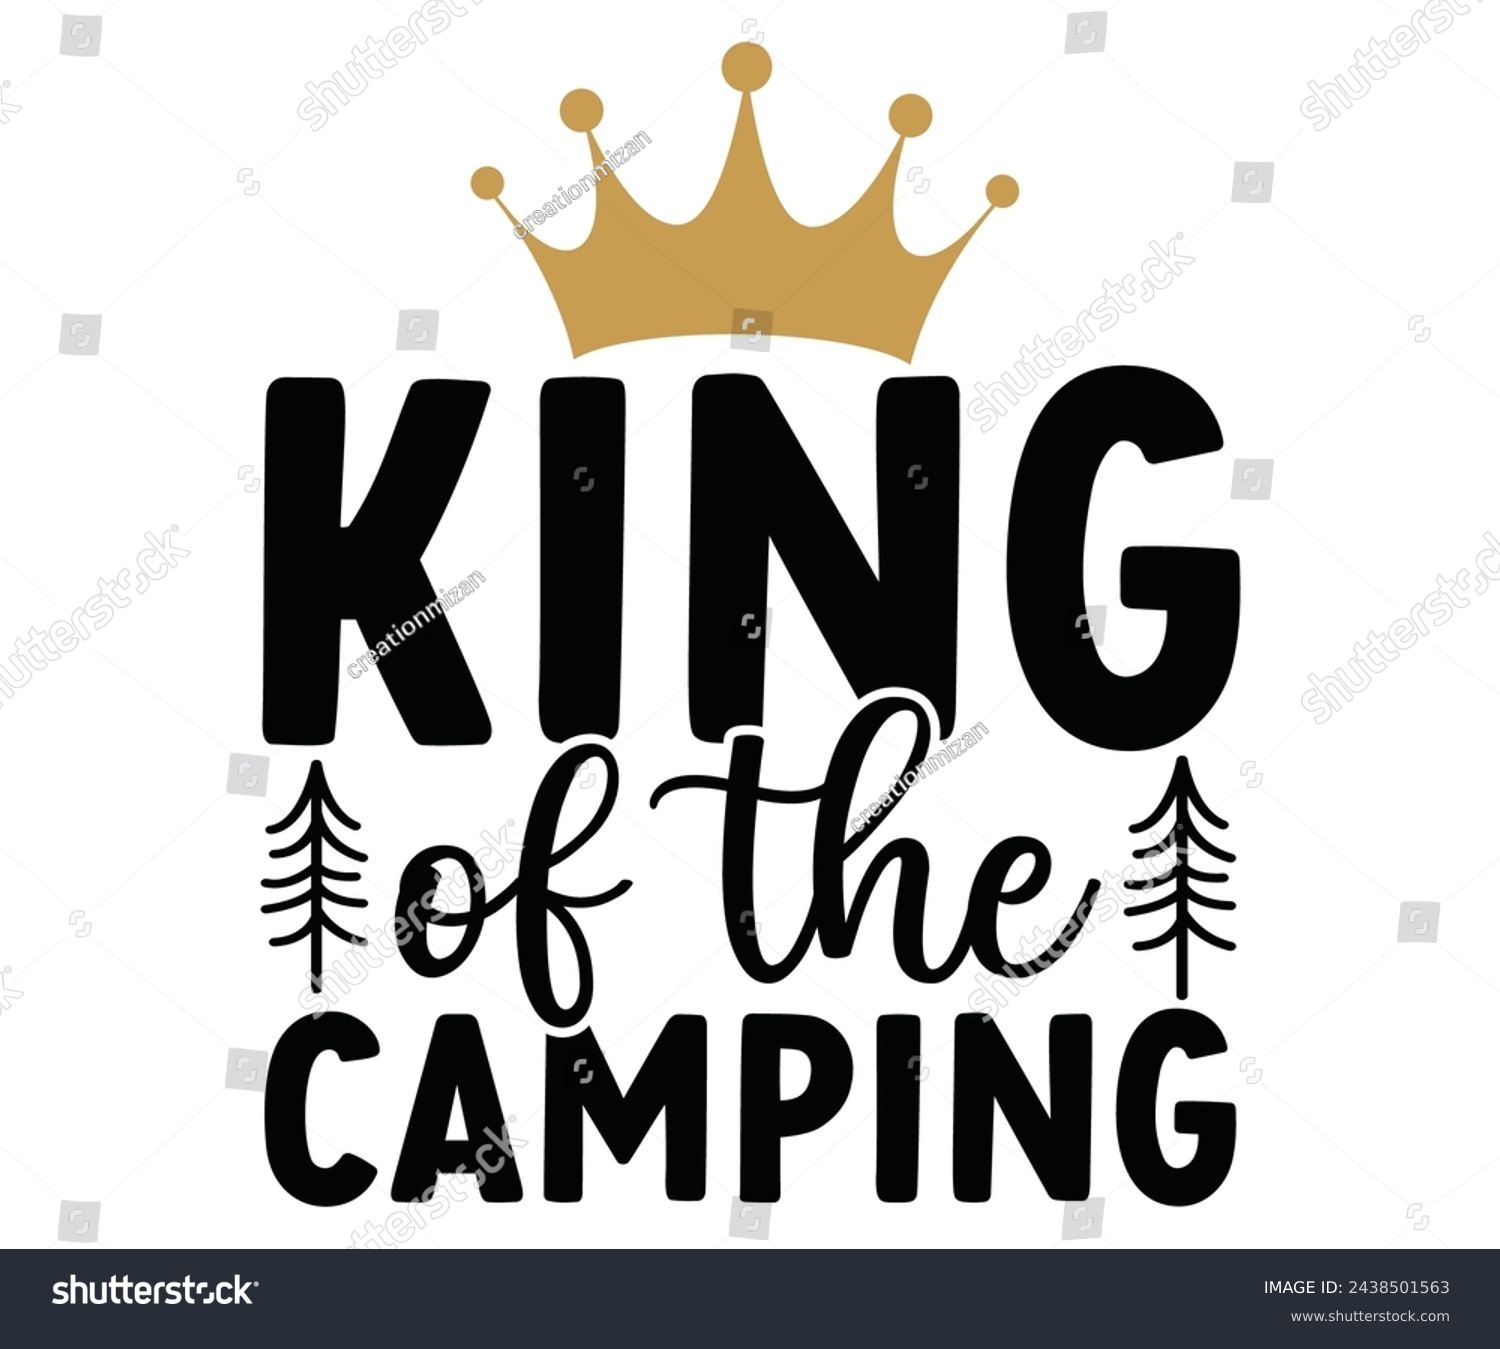 SVG of King of the camping Svg,Camping Svg,Hiking,Funny Camping,Adventure,Summer Camp,Happy Camper,Camp Life,Camp Saying,Camping Shirt svg